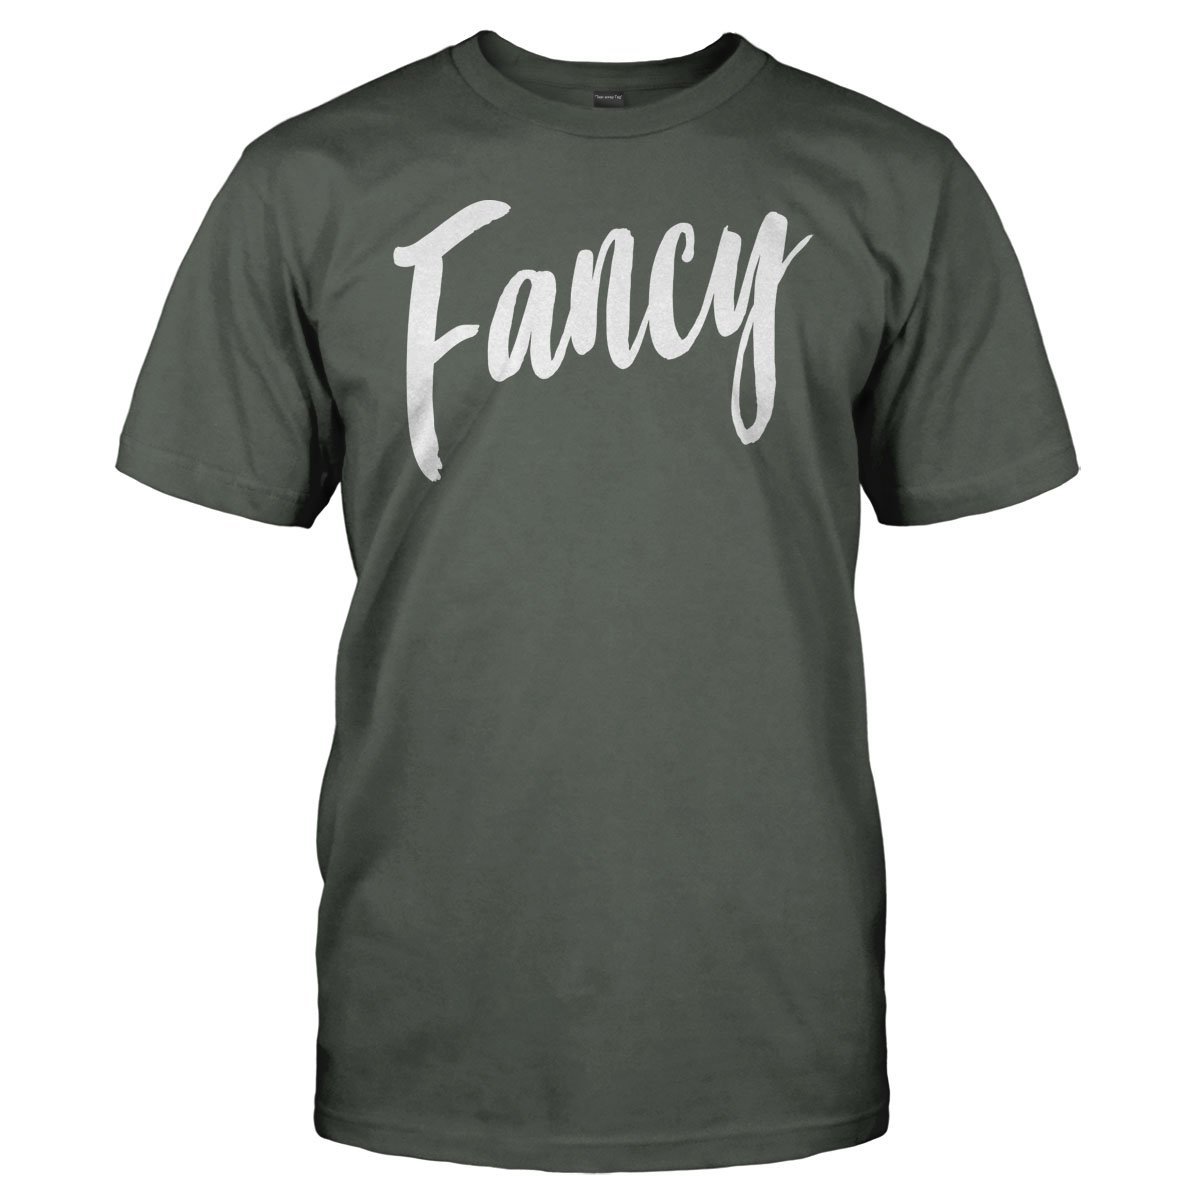 Fancy - T Shirt - I Love Apparel